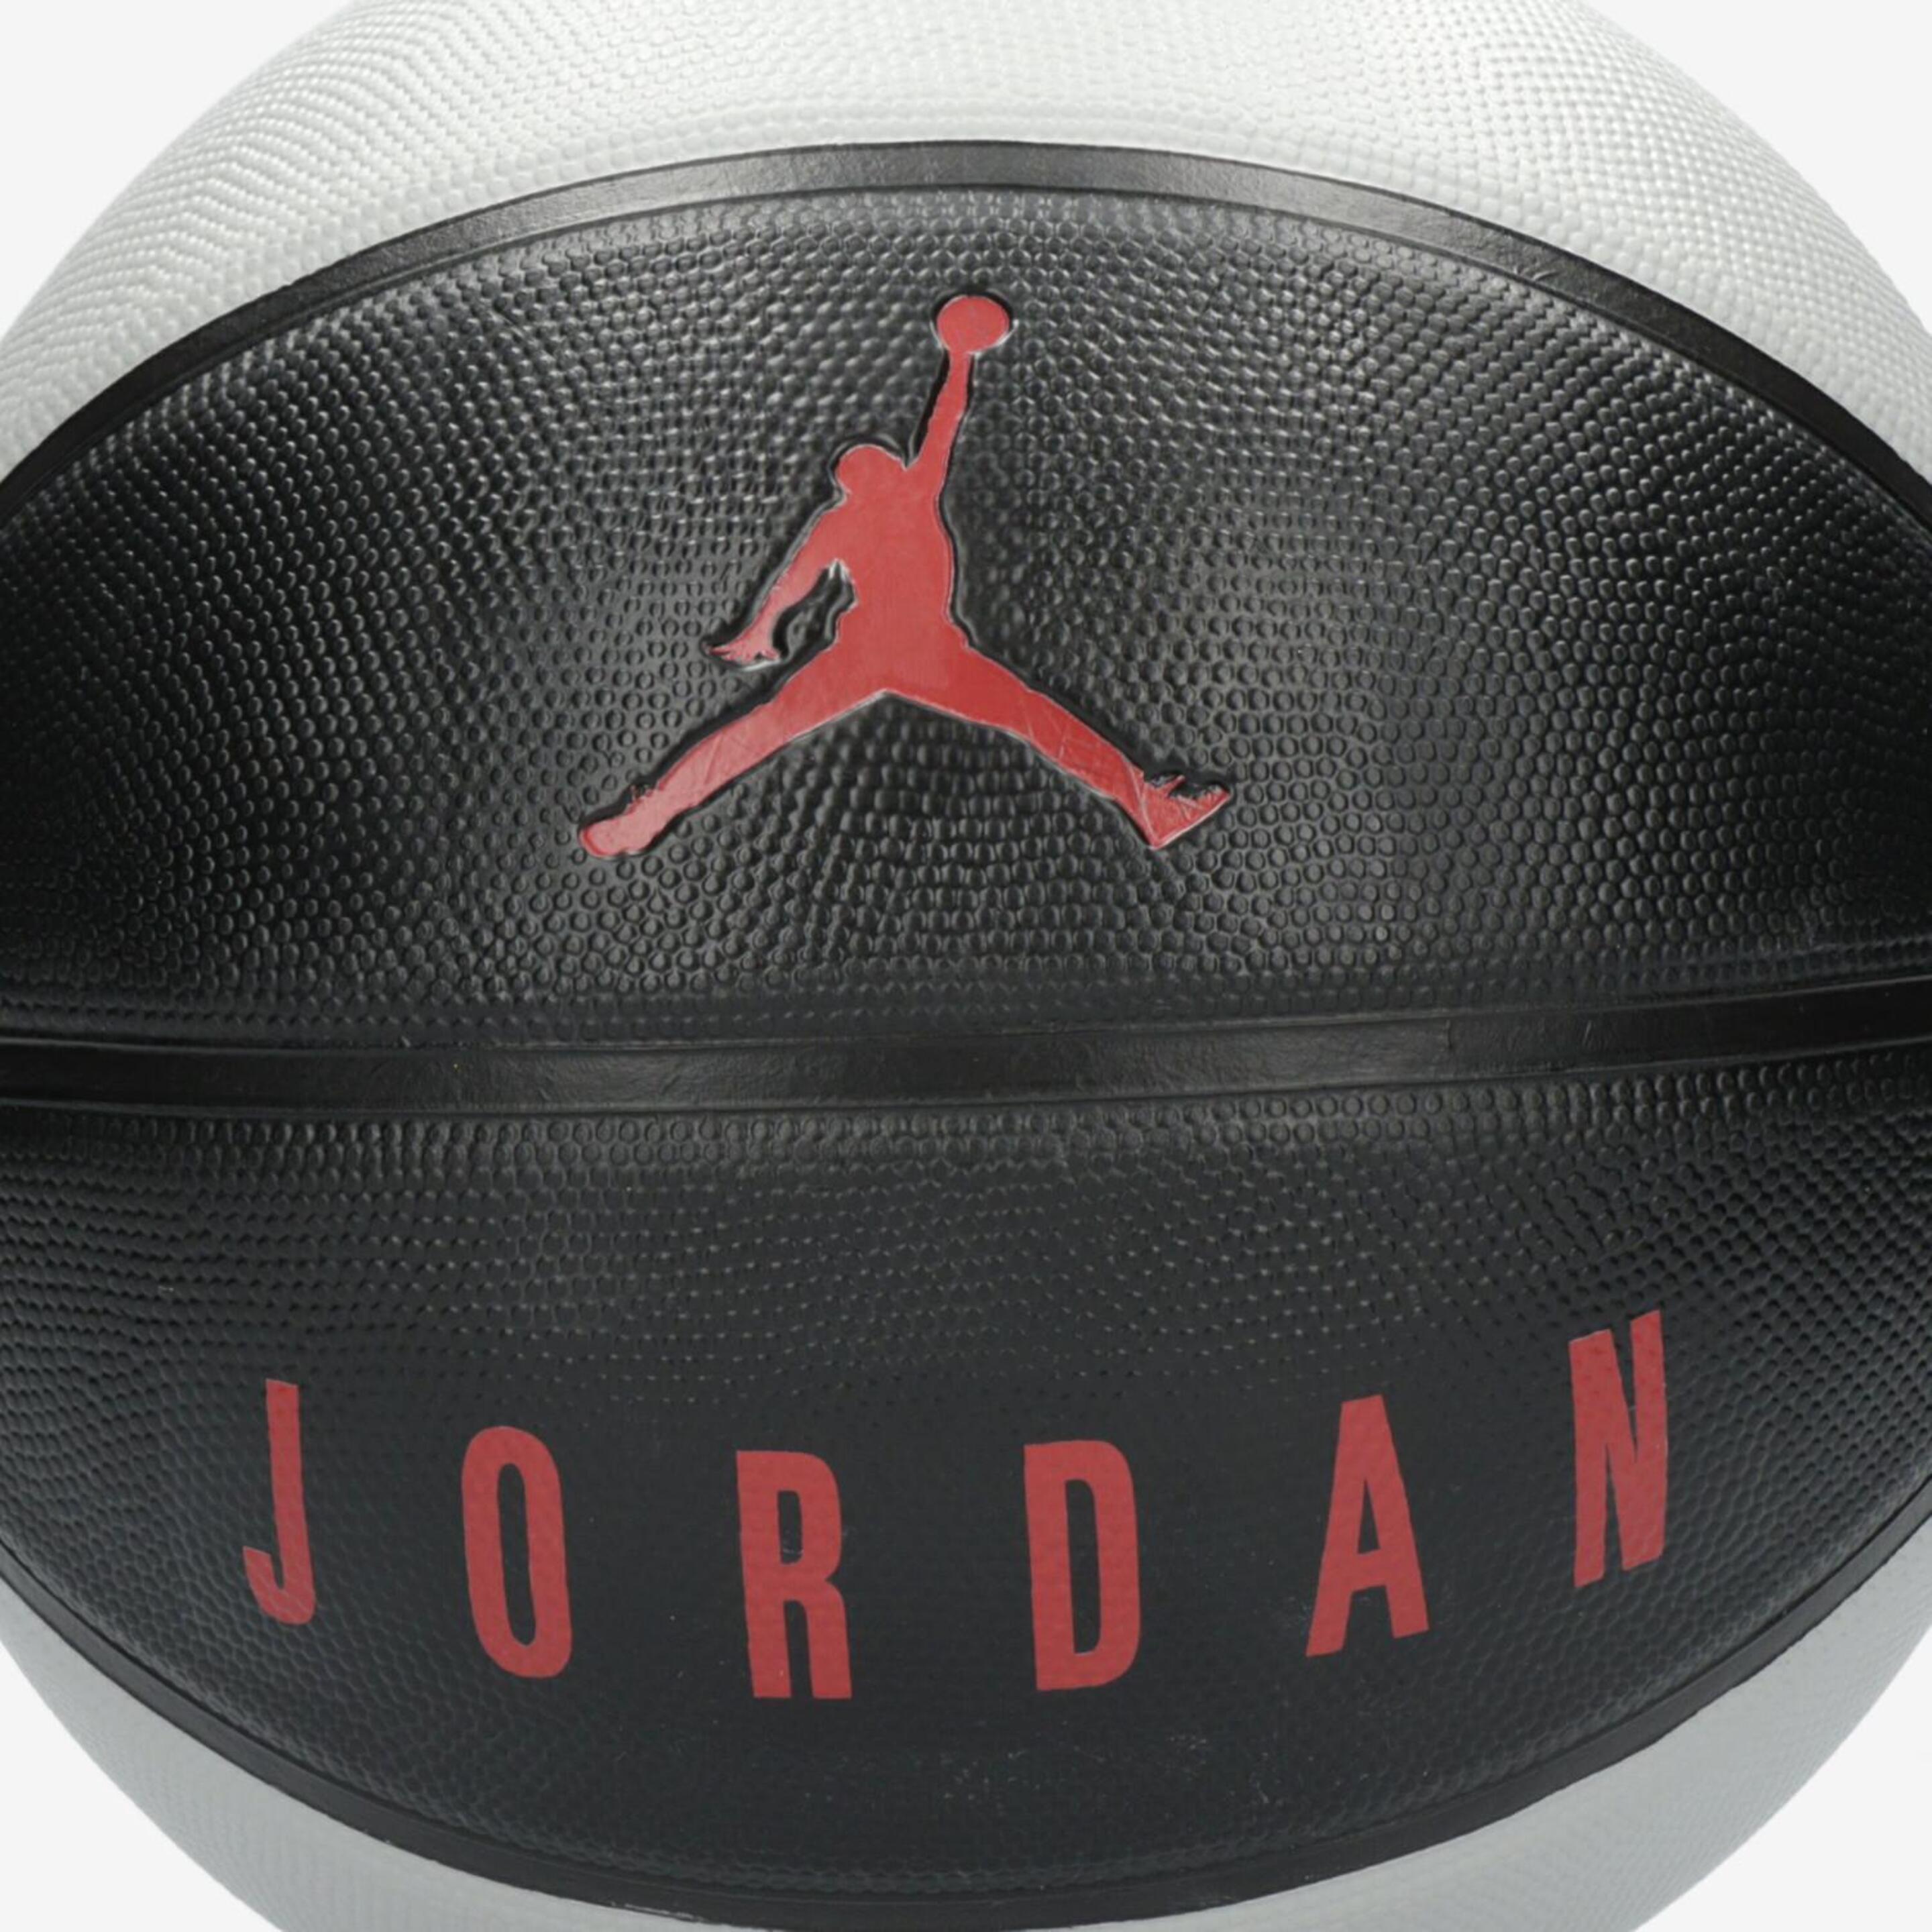 Balon Nike Jordan